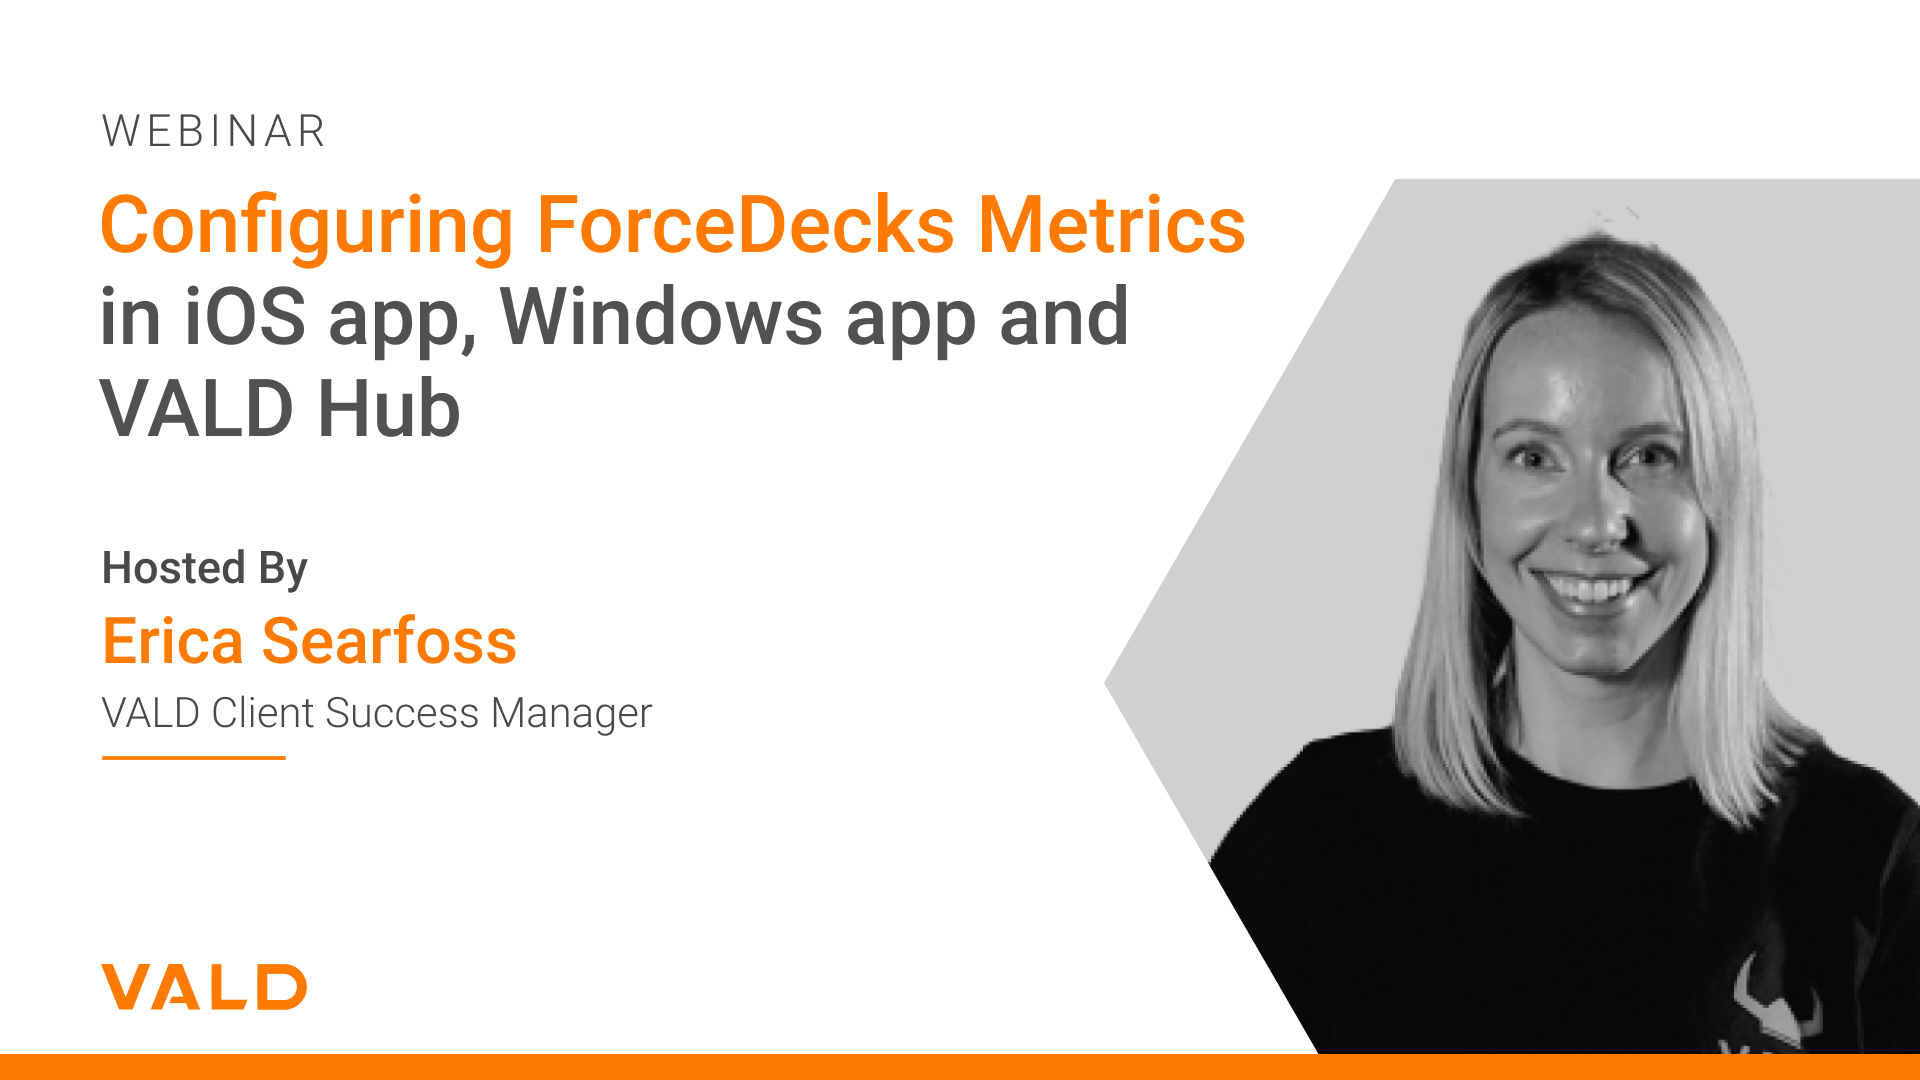 Configuring ForceDecks Metrics in the iOS App, Windows App and VALD Hub